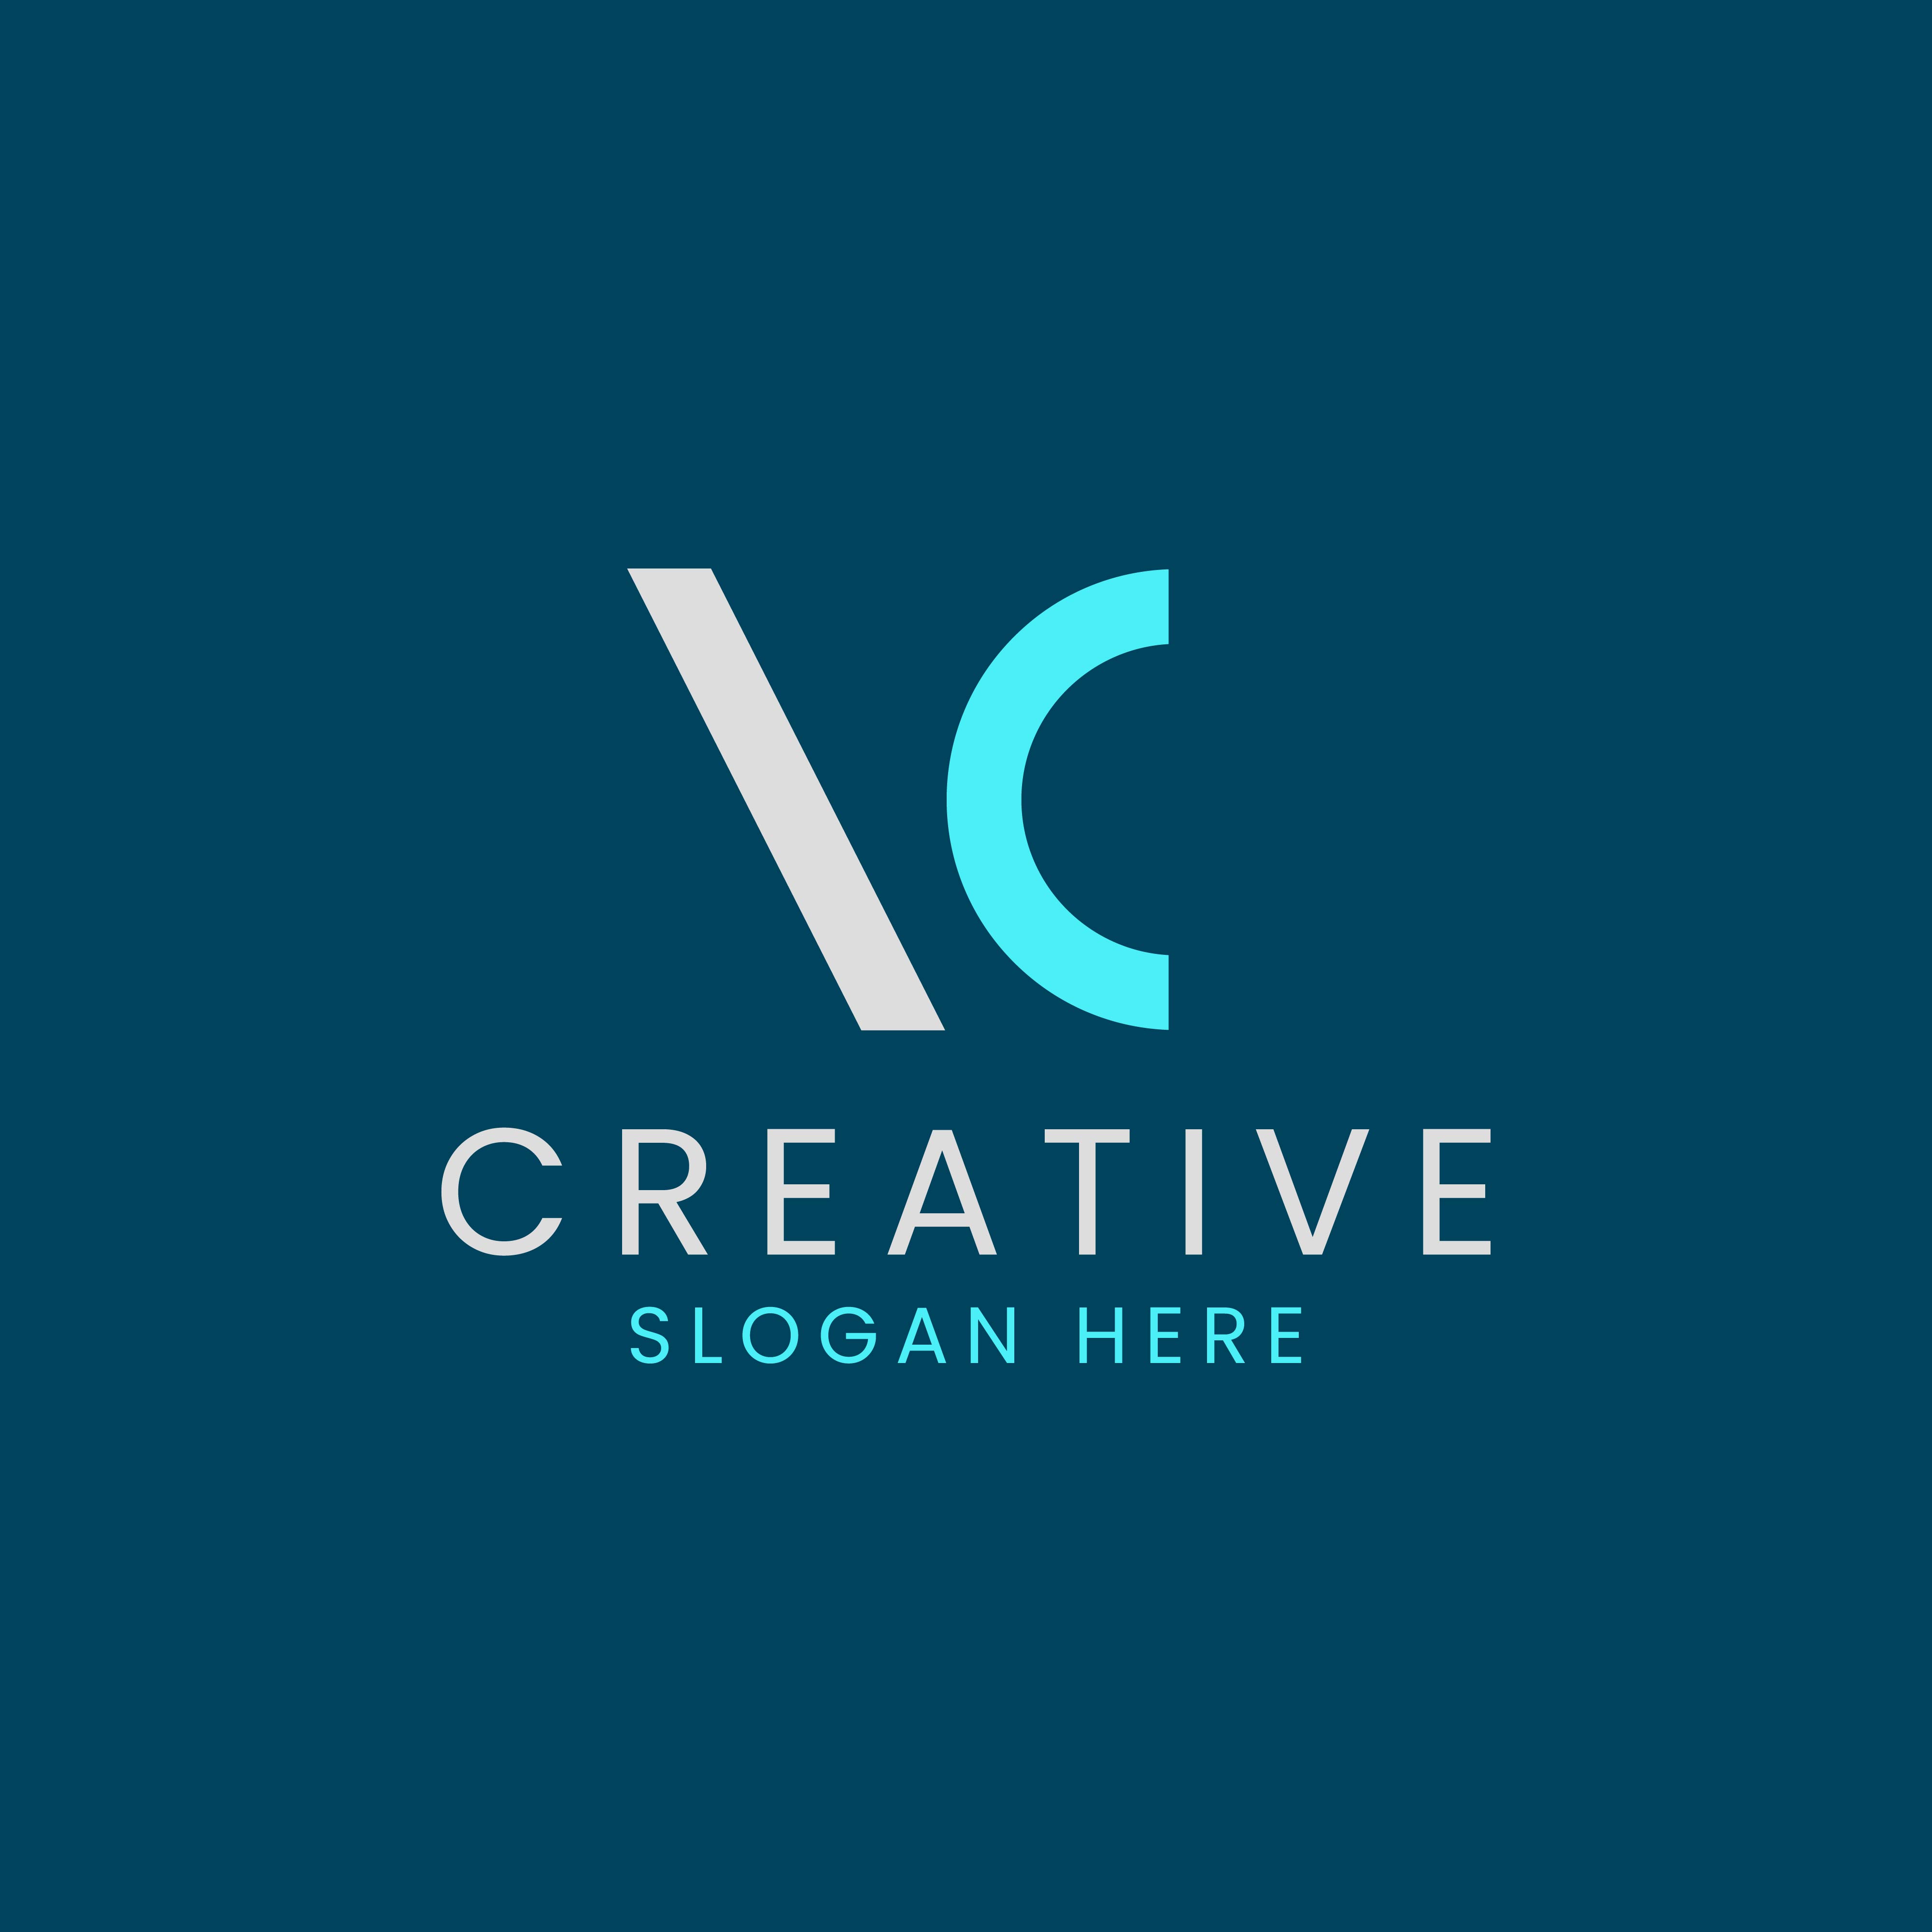 Creative Letter VC Logo Design Vector Image preview image.